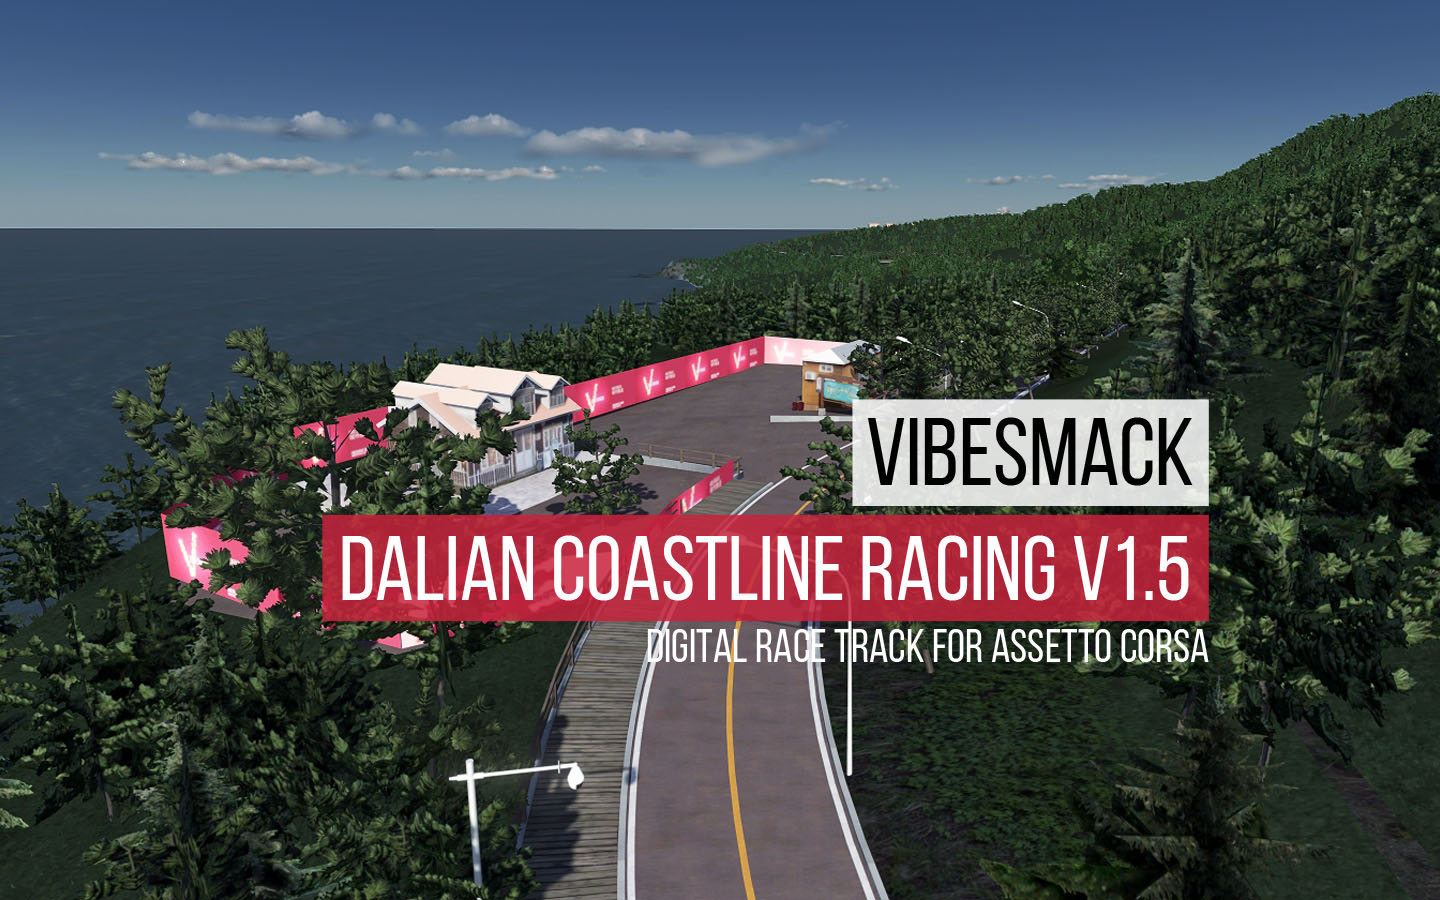 Dalian Coastline Racing - Digital Race Track for Assetto Corsa